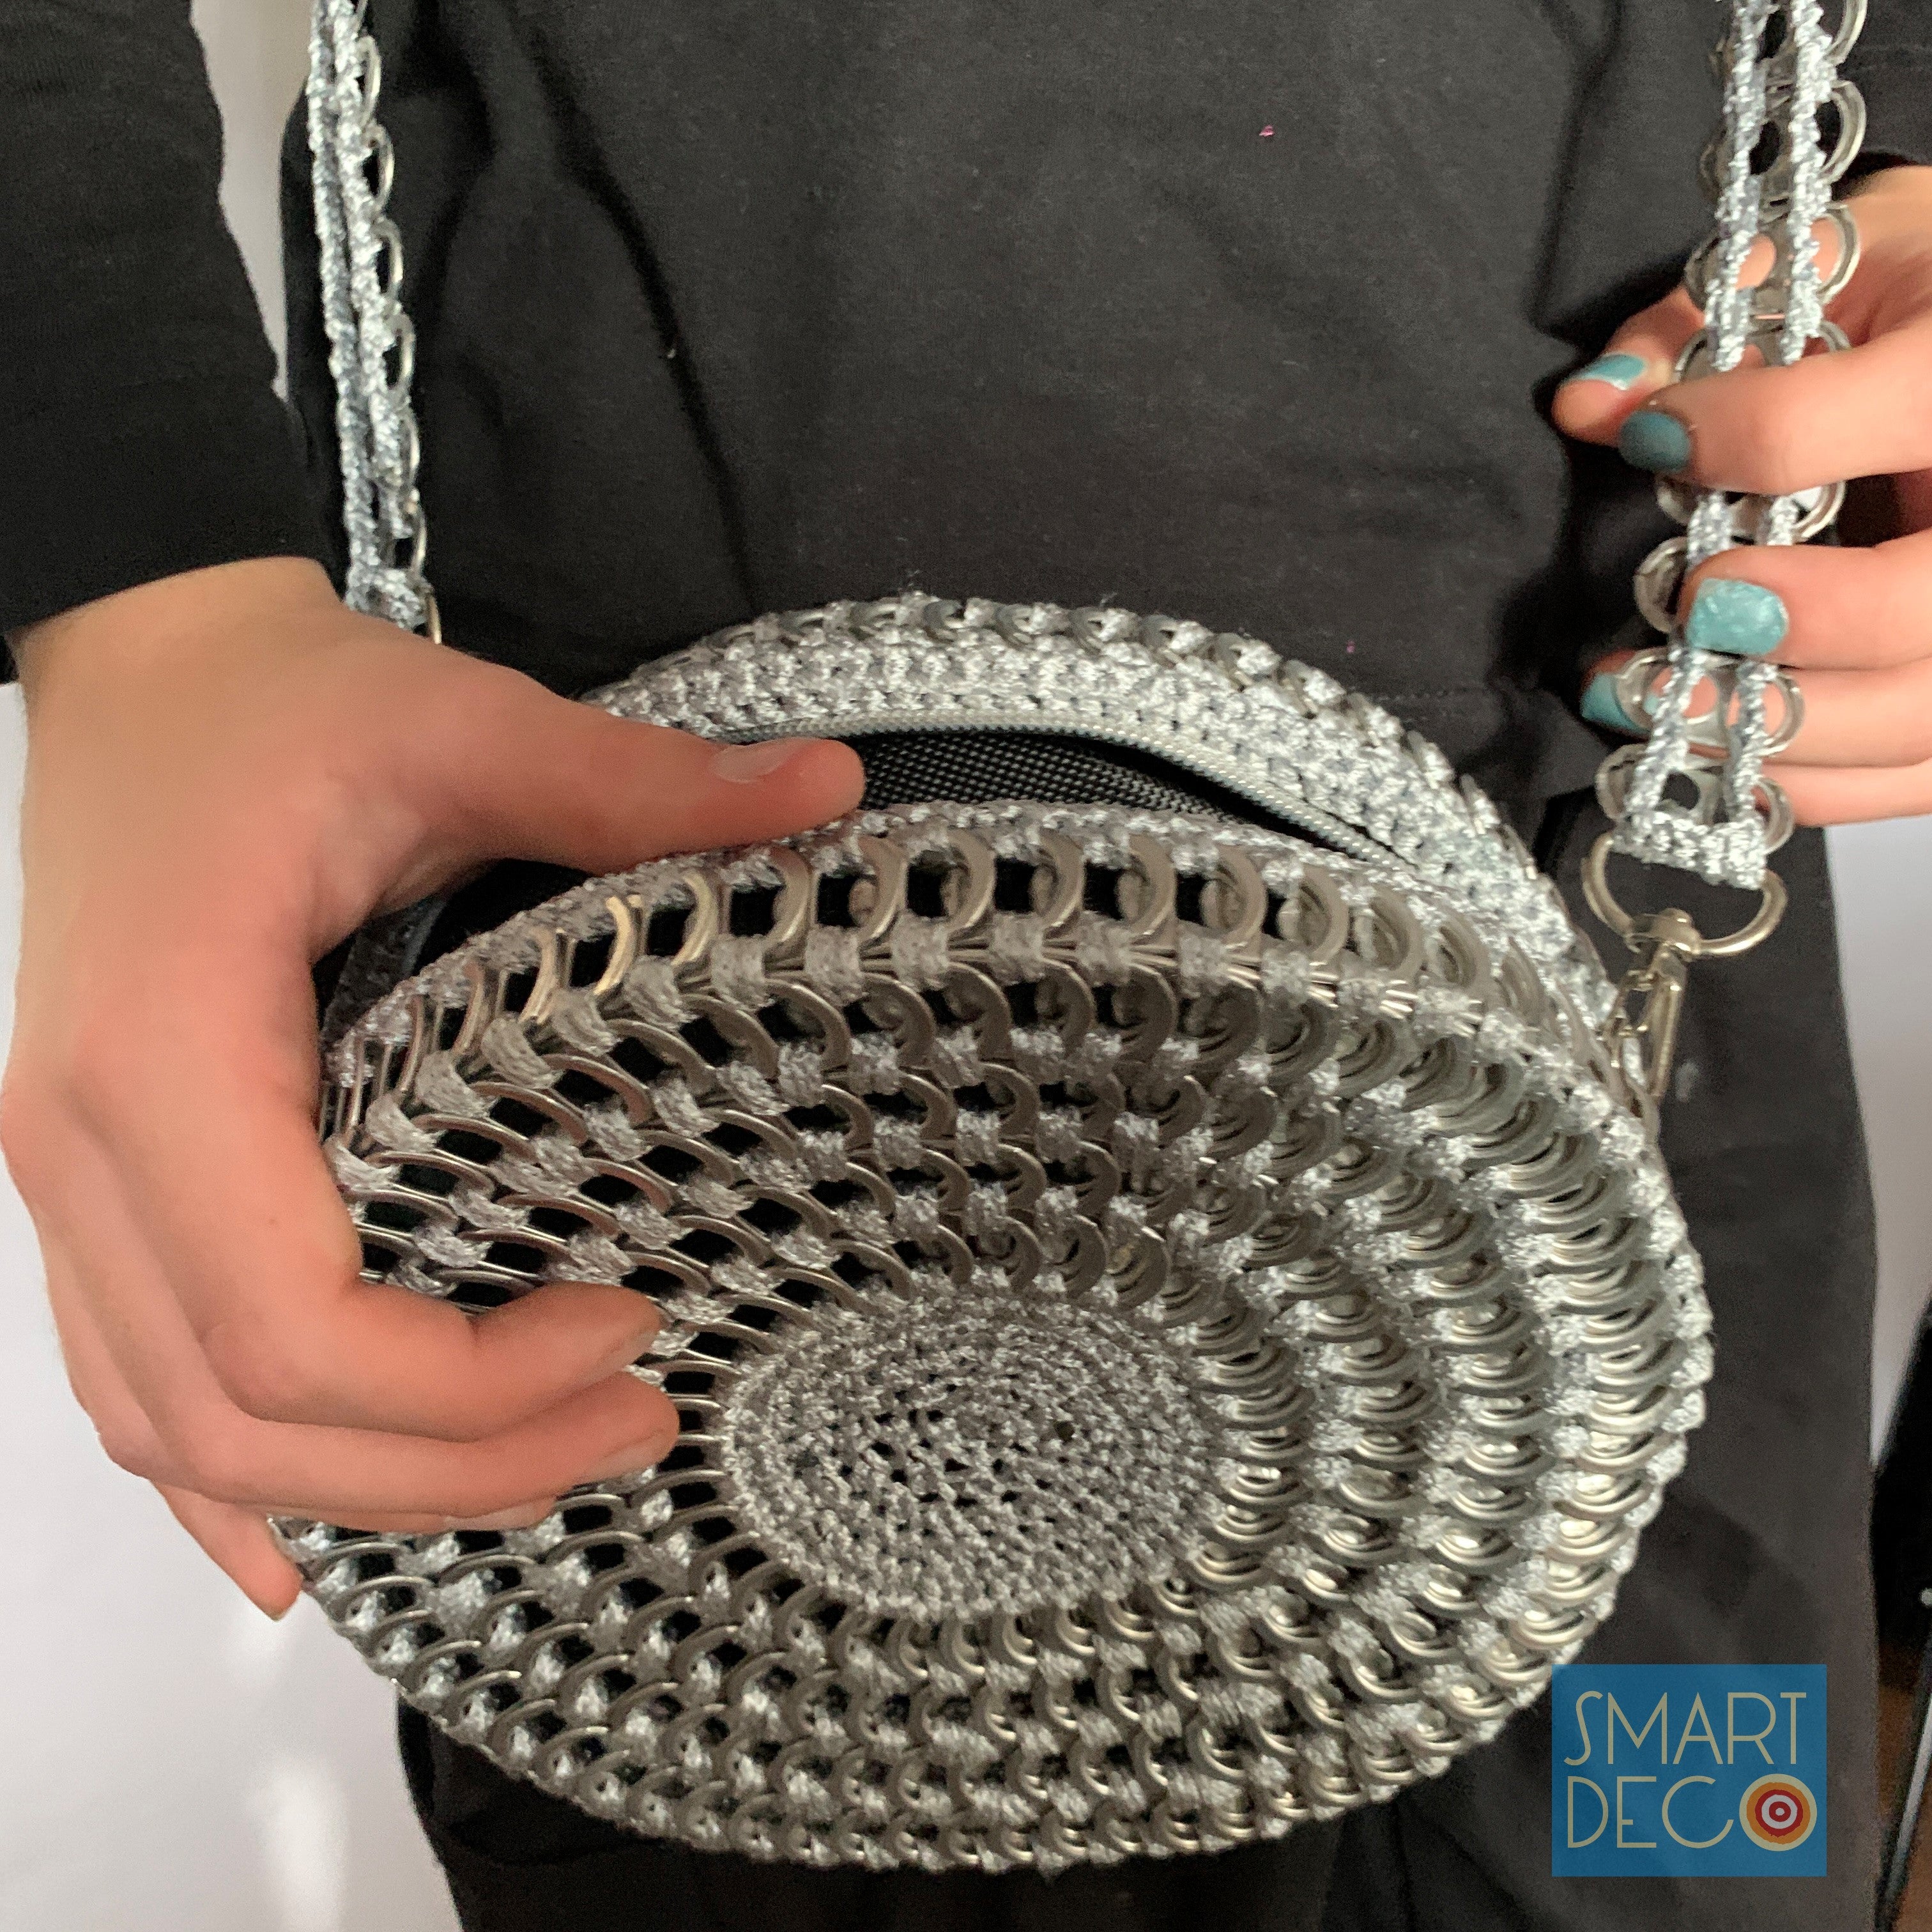 Soda Pop Daisy Chain Bag - Handmade with Metallic Silver Ring-Pulls